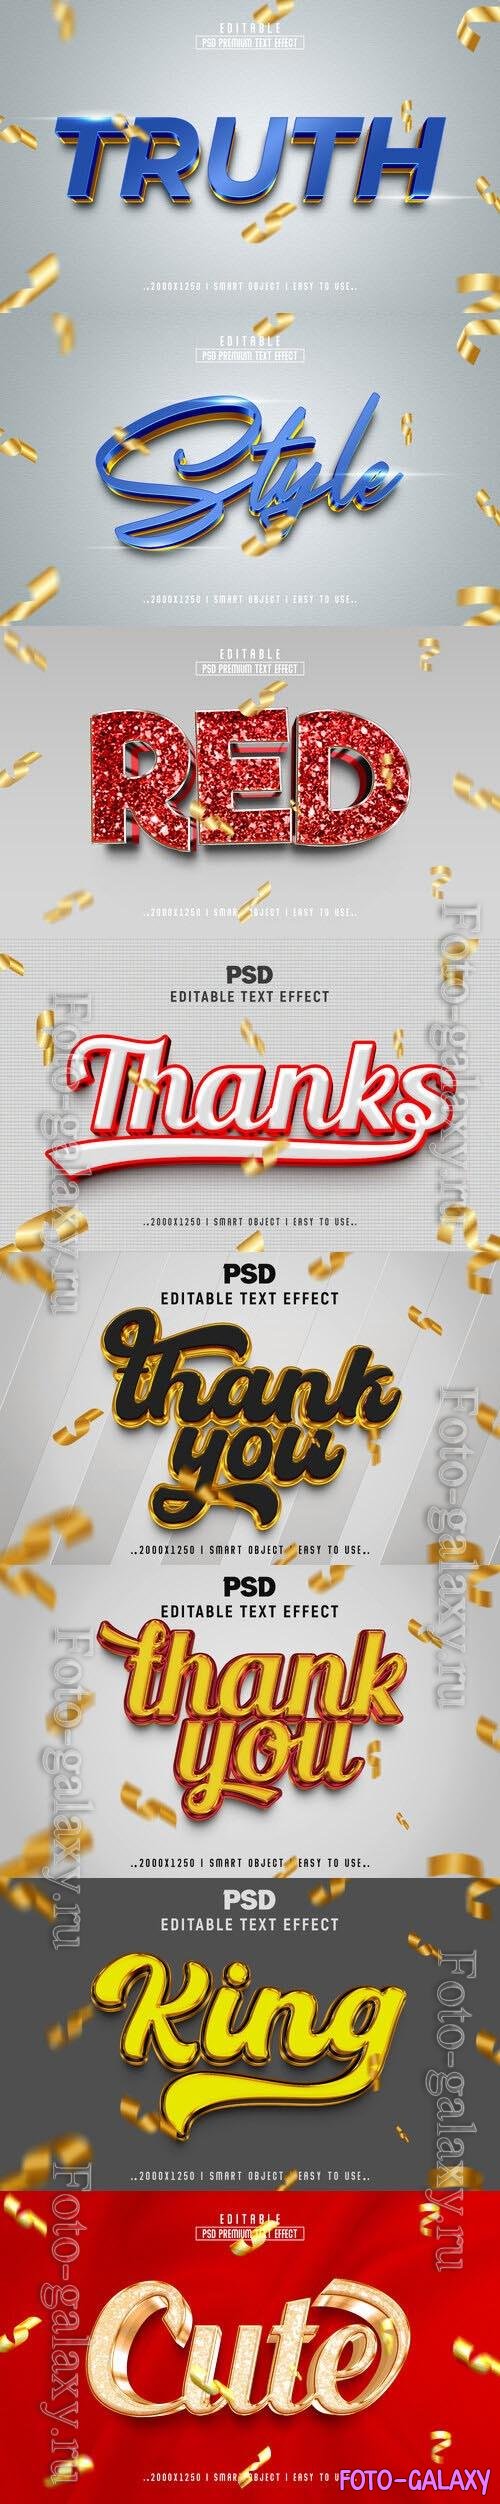 8 Psd style text effect editable set vol 40